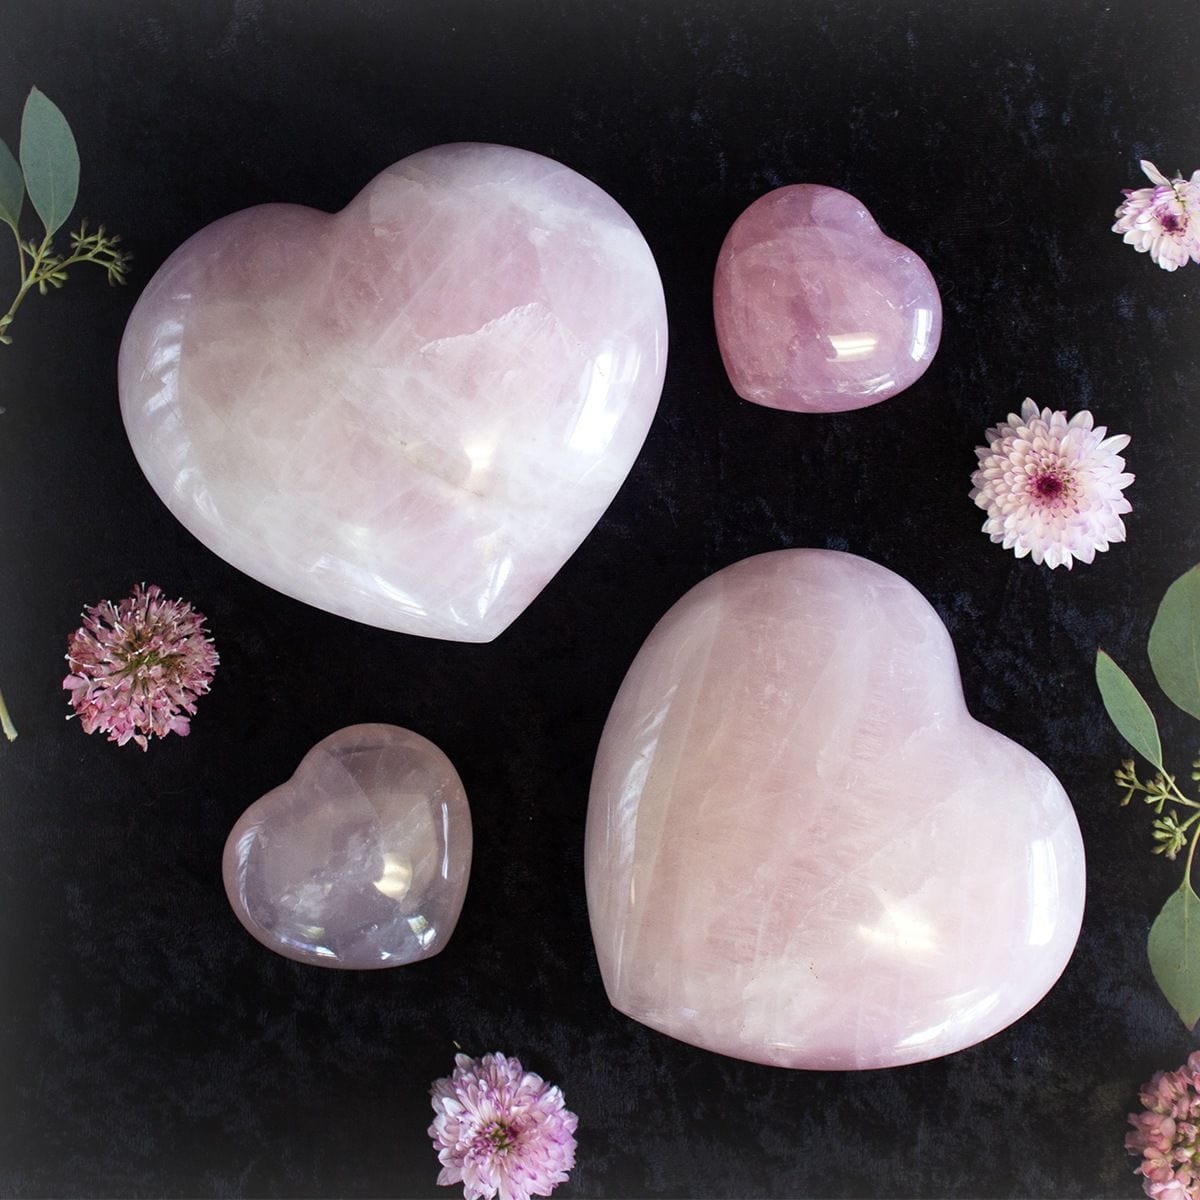 Heart Stone Crystals Variety of Options Dainty Crystals Medium Rose Quartz